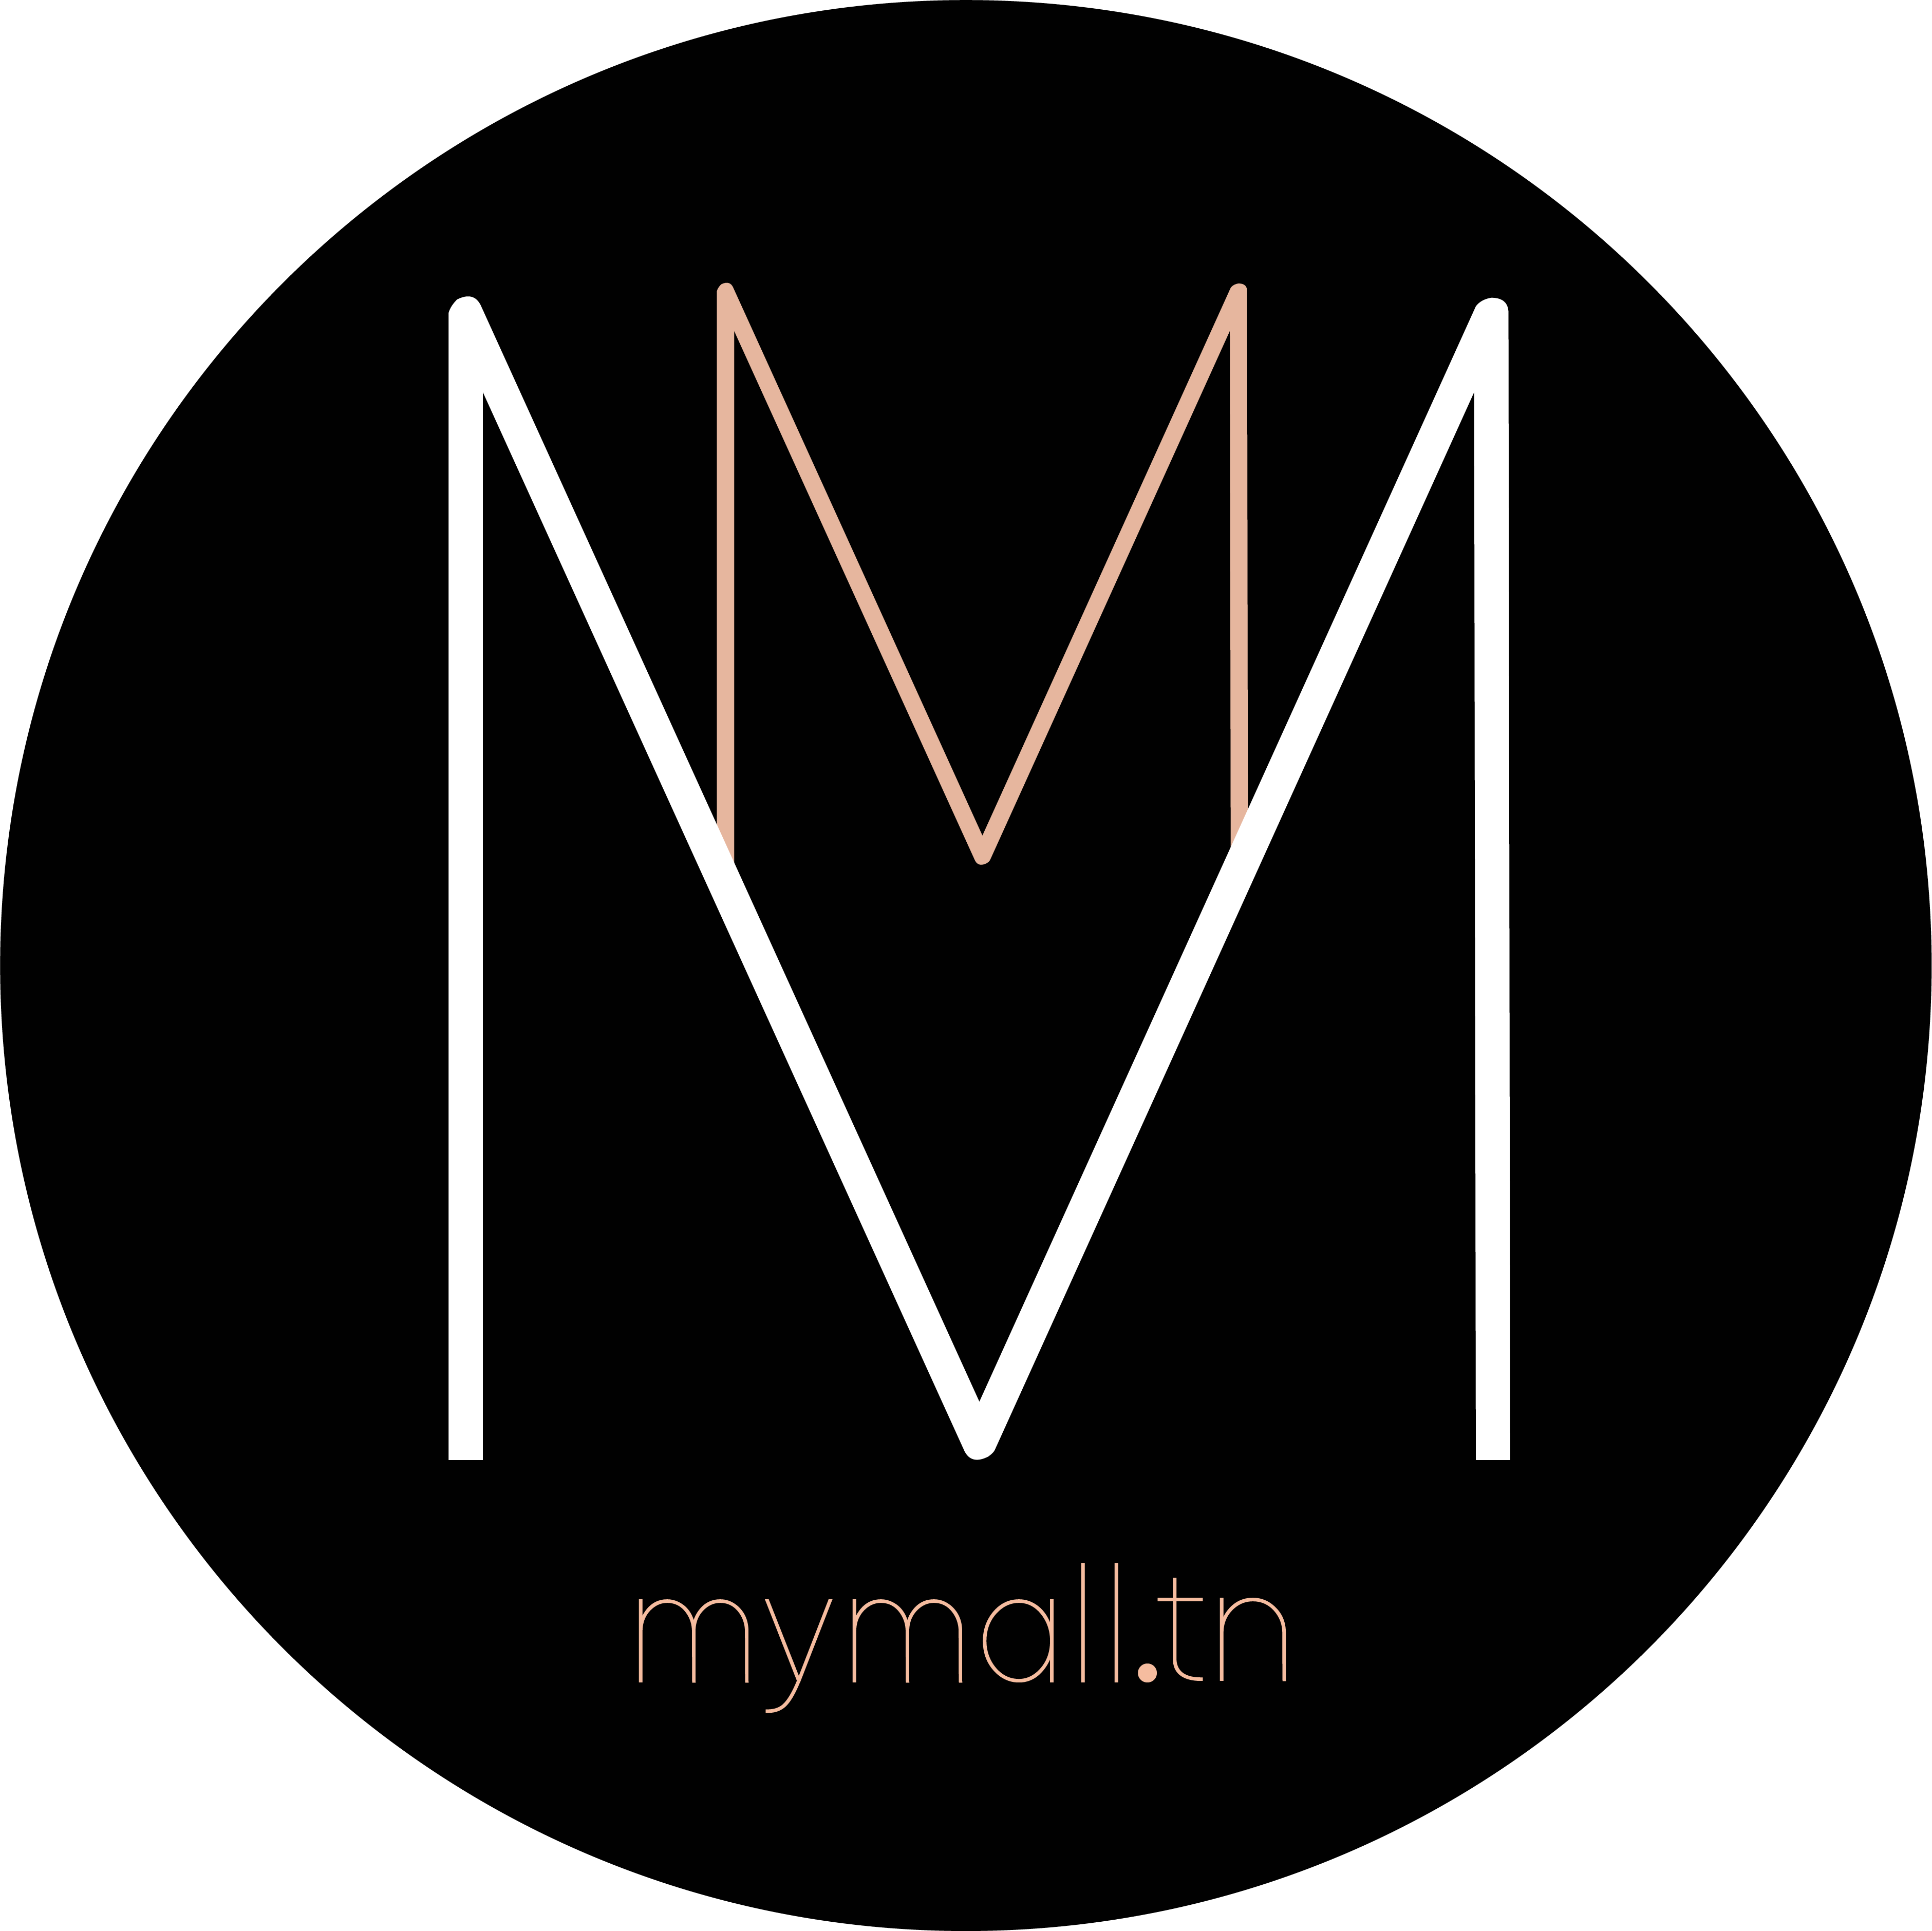 Logo Mymall tn